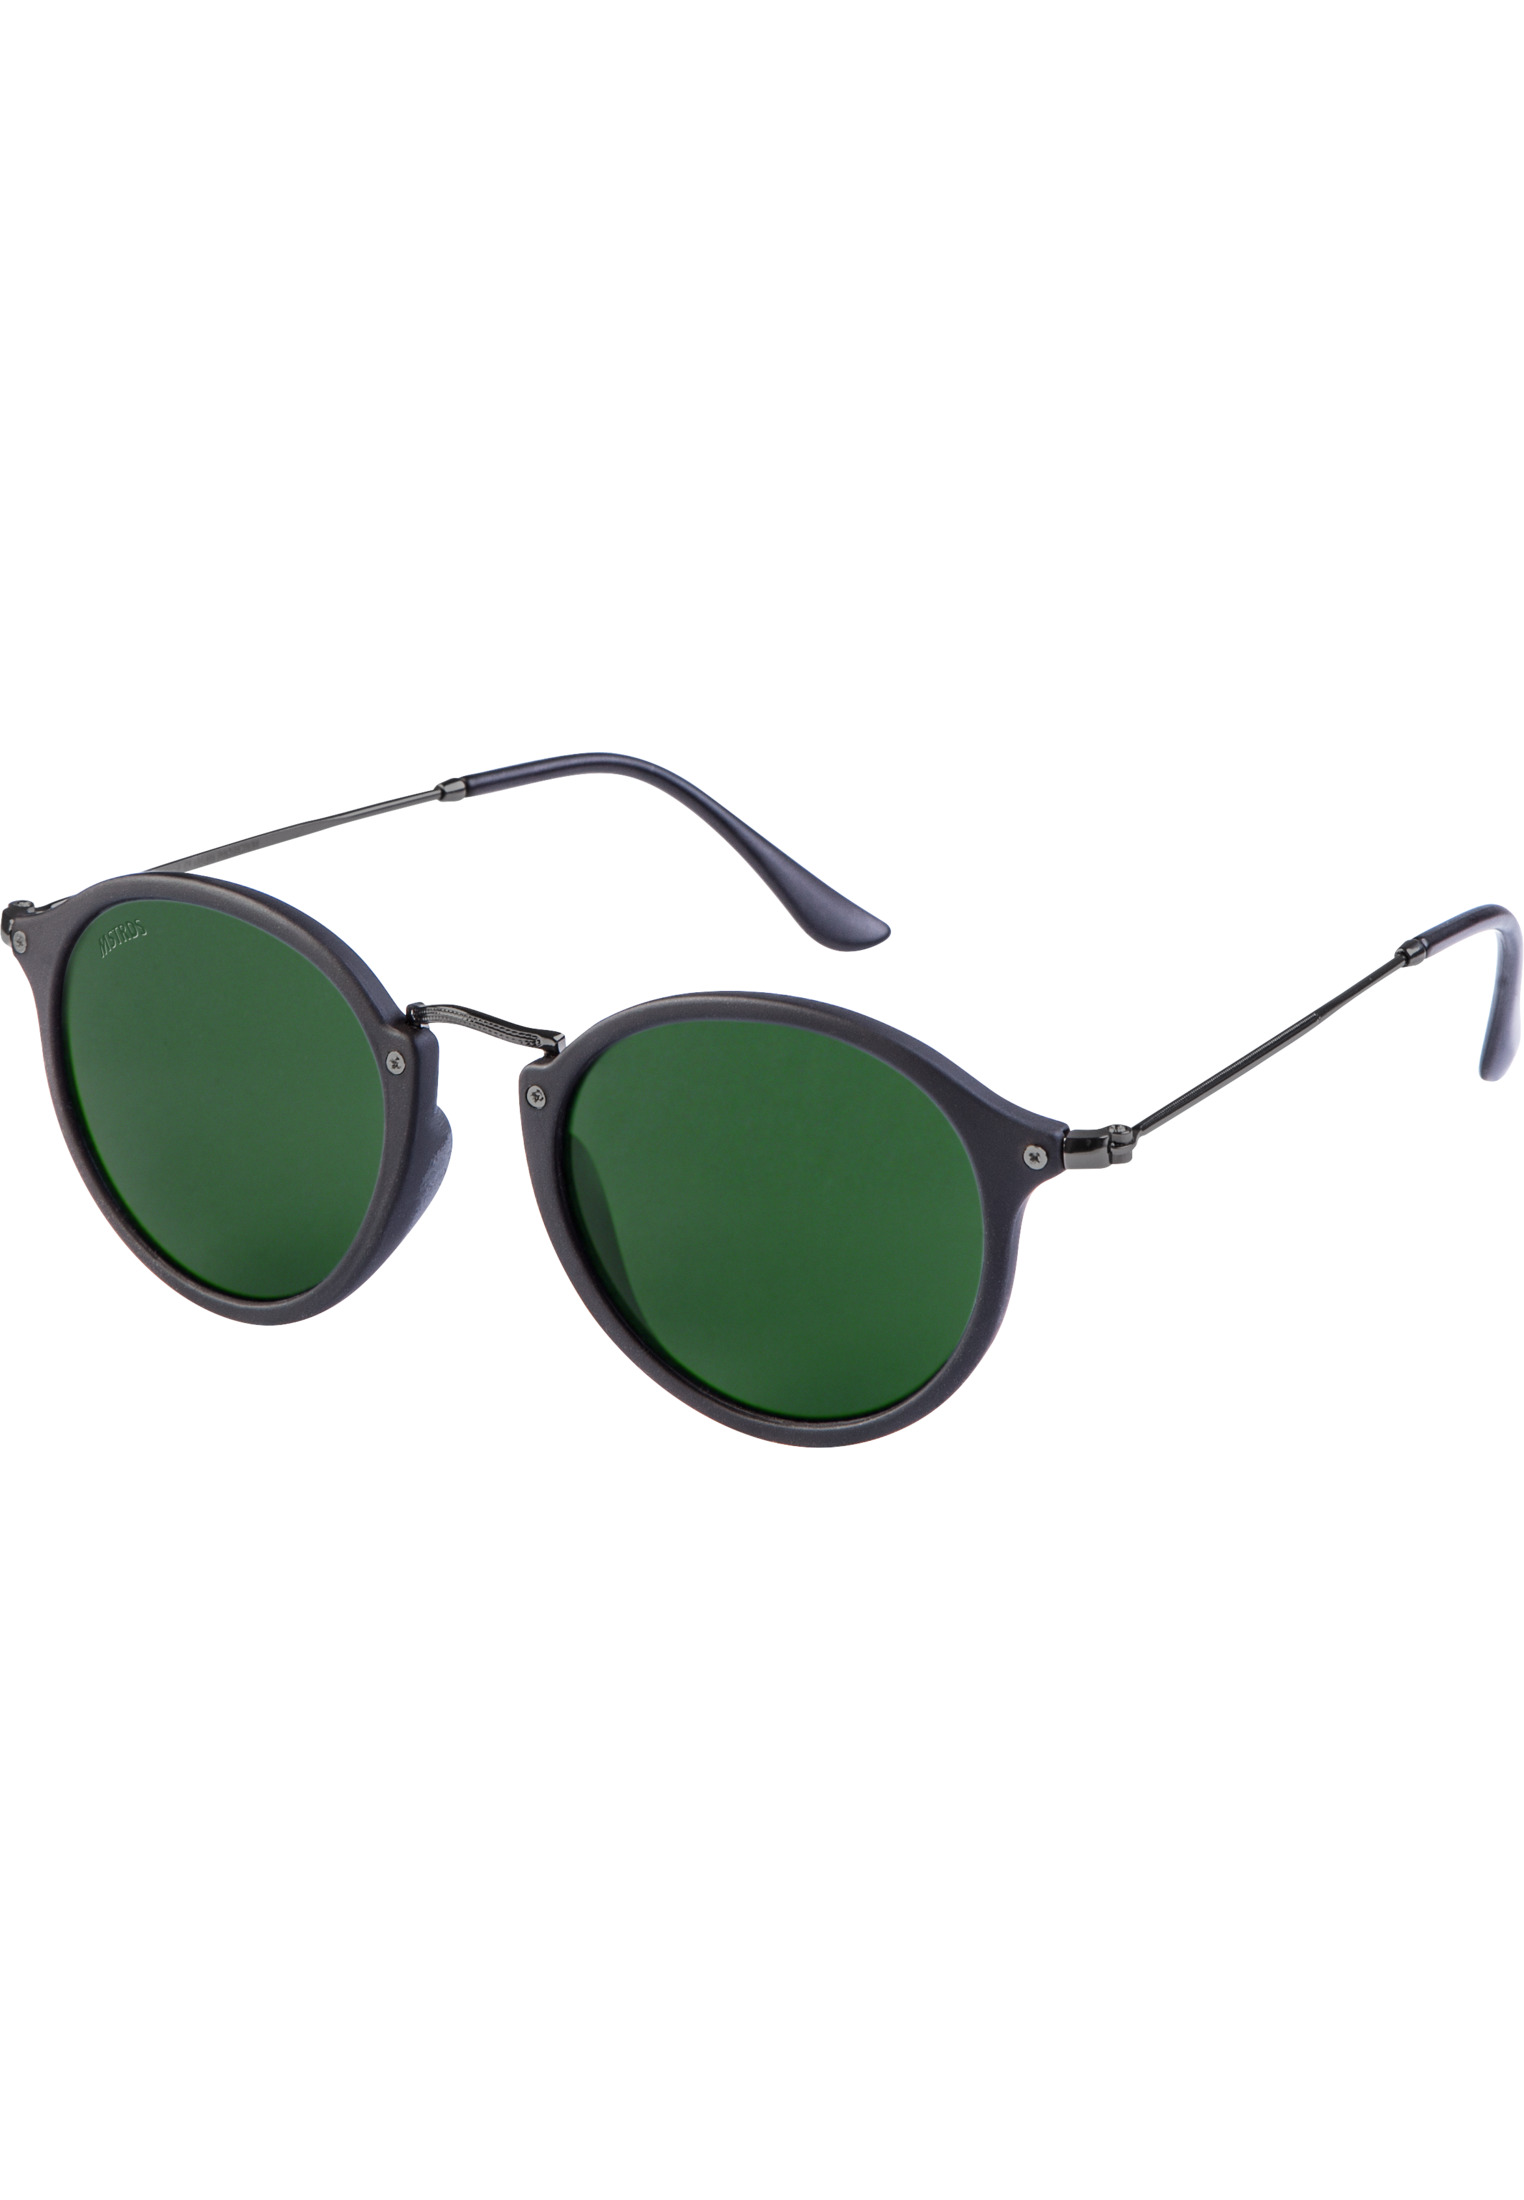 Accessoires Unisex | Sunglasses Sonnenbrillen | Ayazo MSTRDS Herren | Spy Sonnenbrille